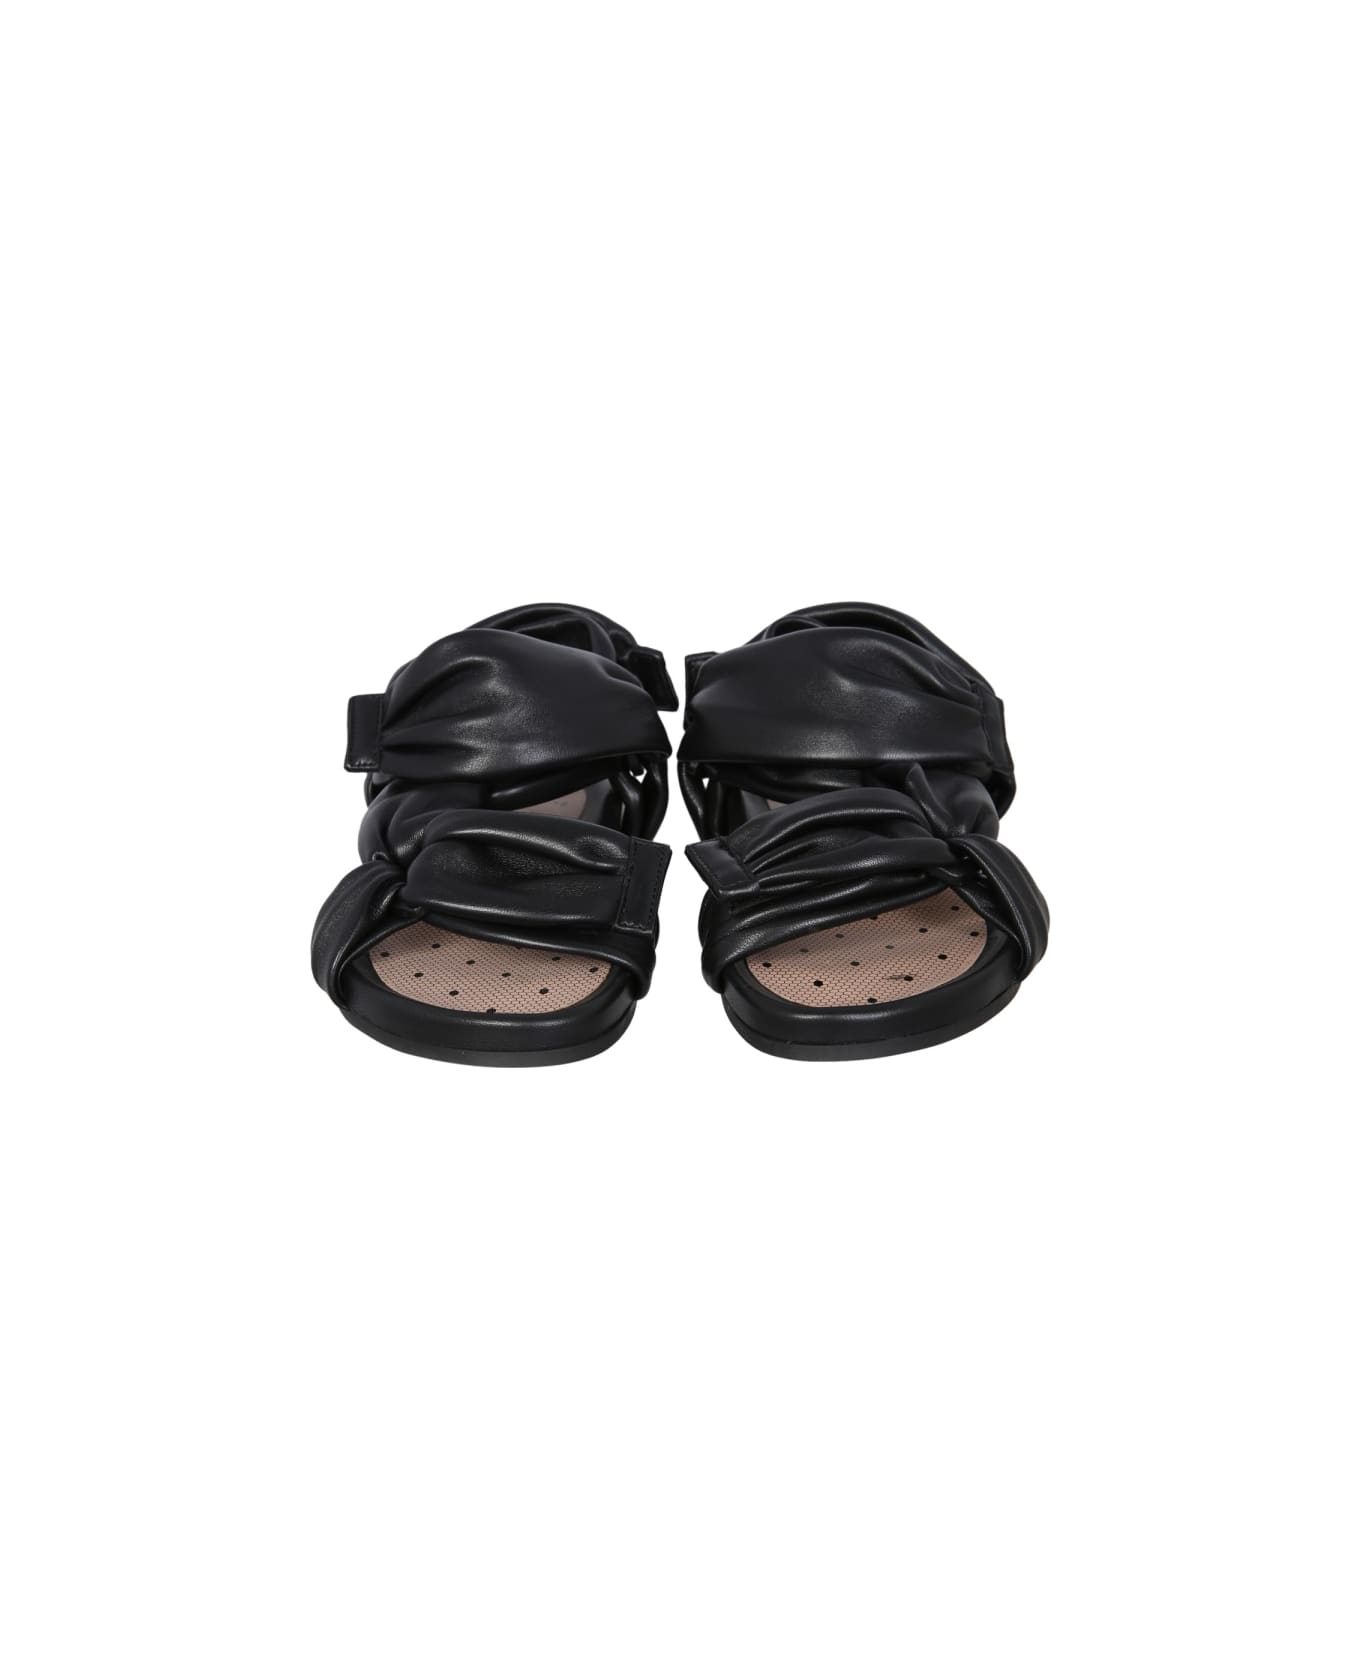 RED Valentino Puffy Strap Sandals - BLACK サンダル